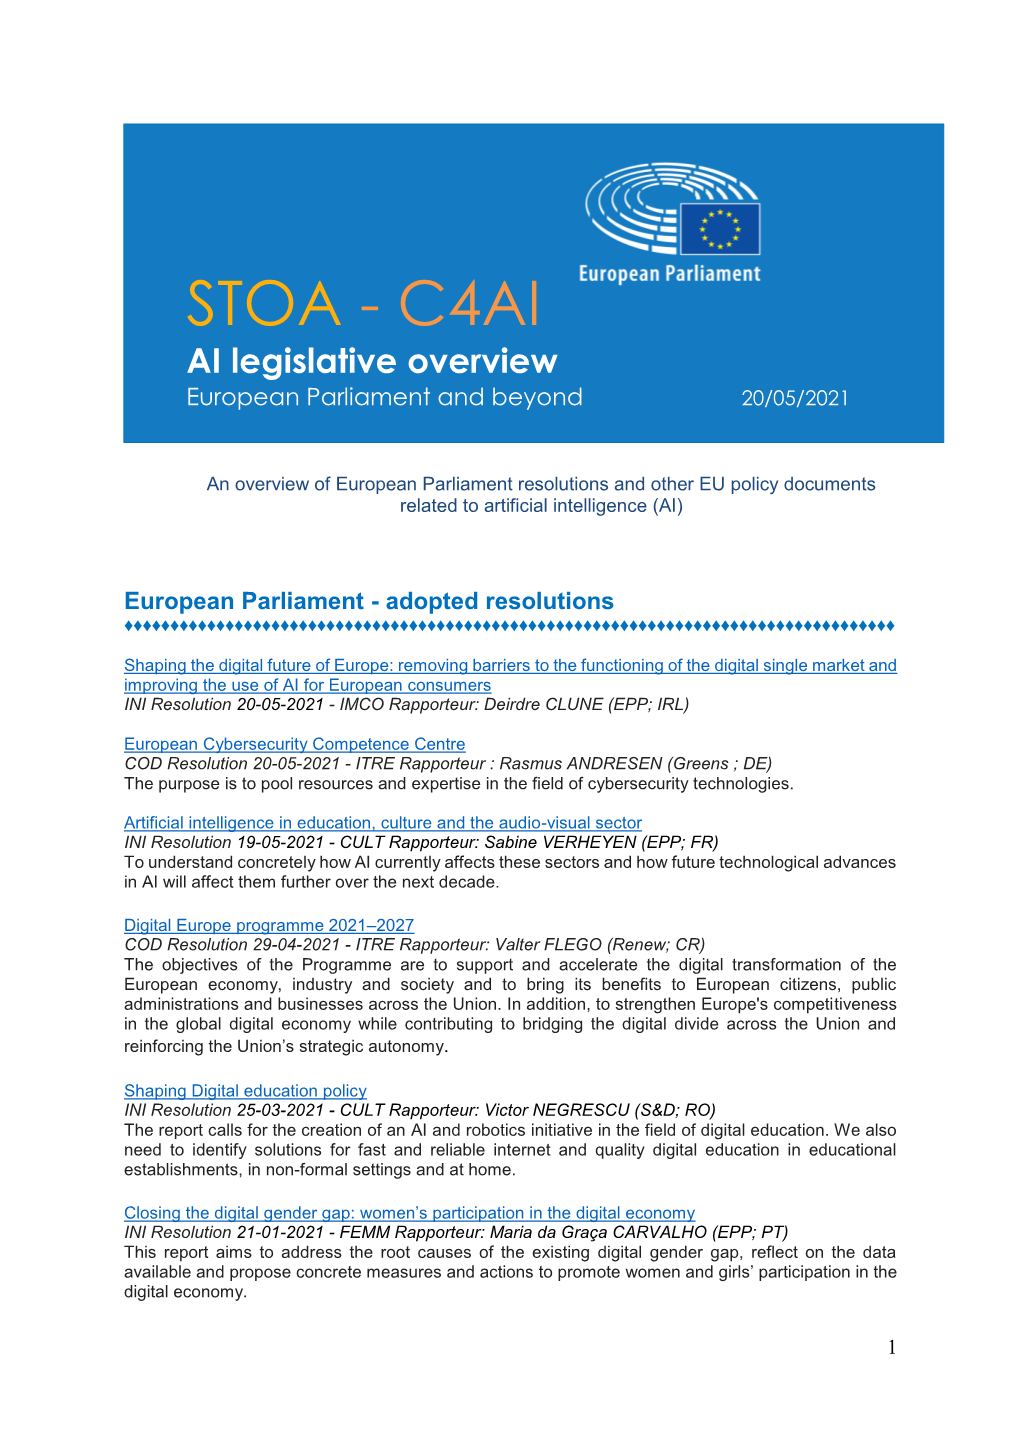 STOA - C4AI AI Legislative Overview European Parliament and Beyond 20/05/2021